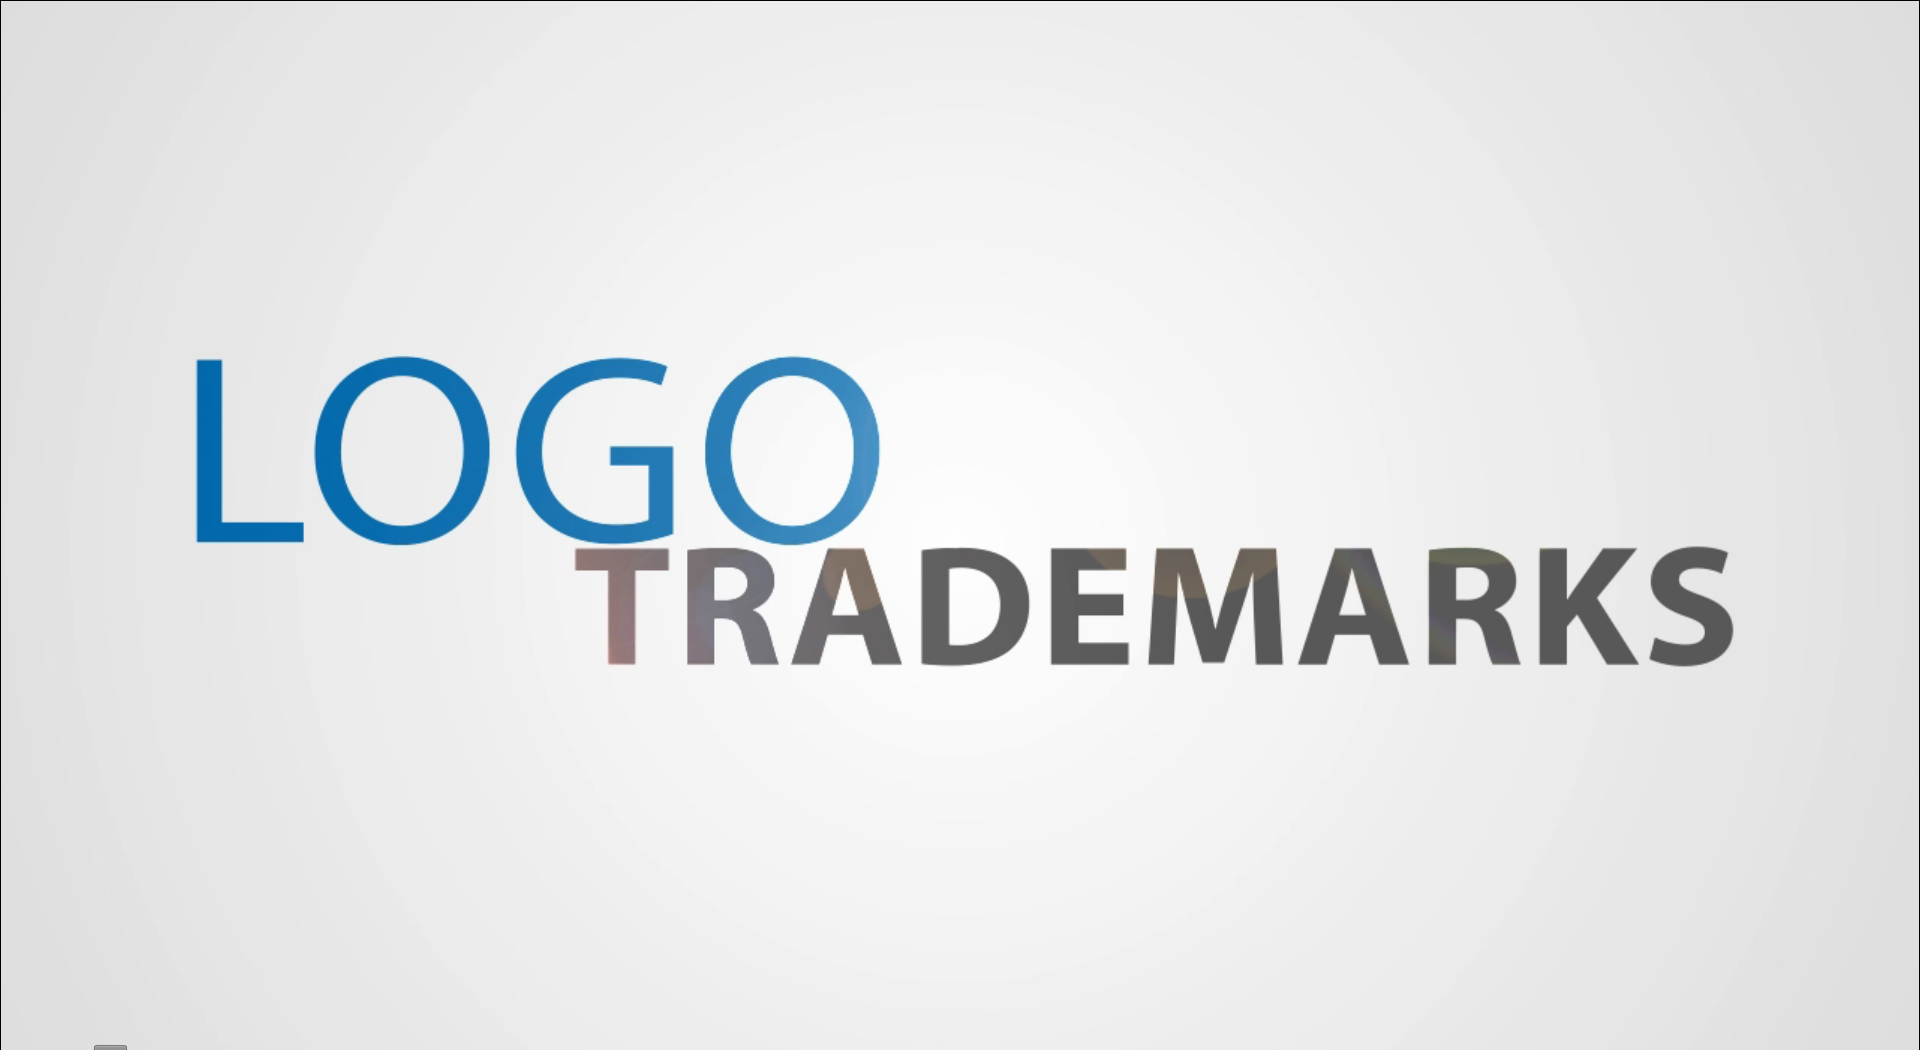 How To Trademark A Logo?